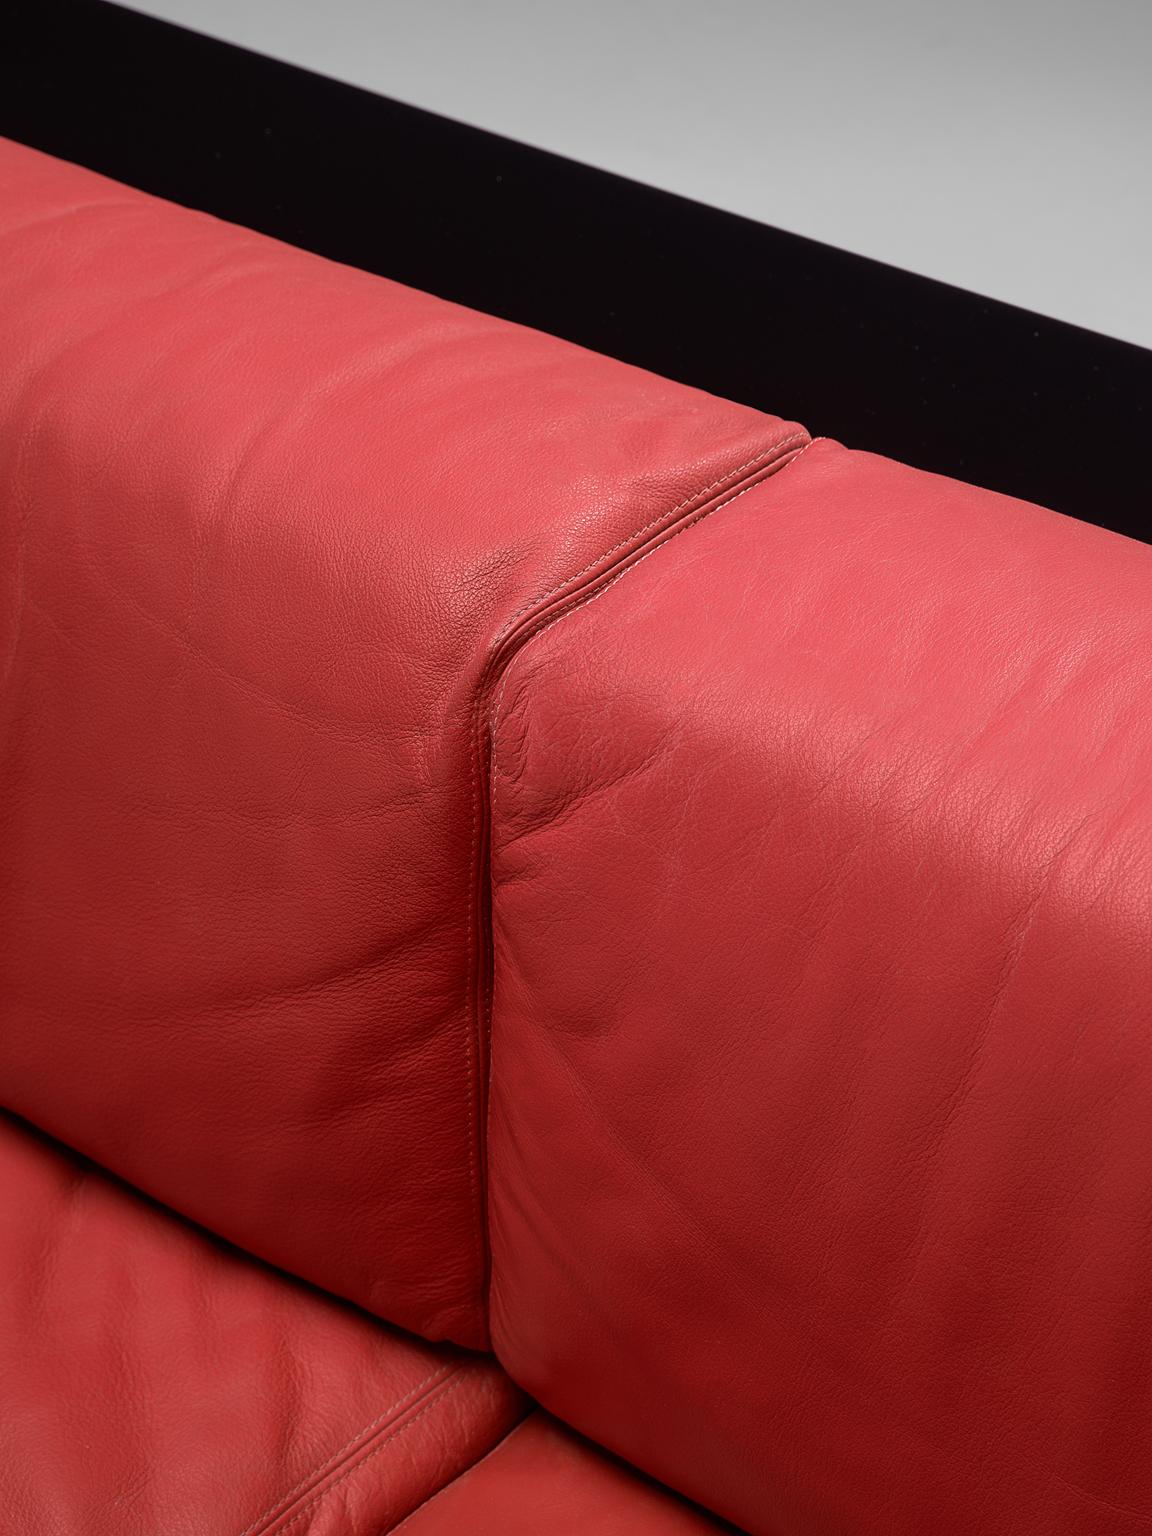 Lacquered Massimo Vignelli Black and Red 'Saratoga' Living Room Set